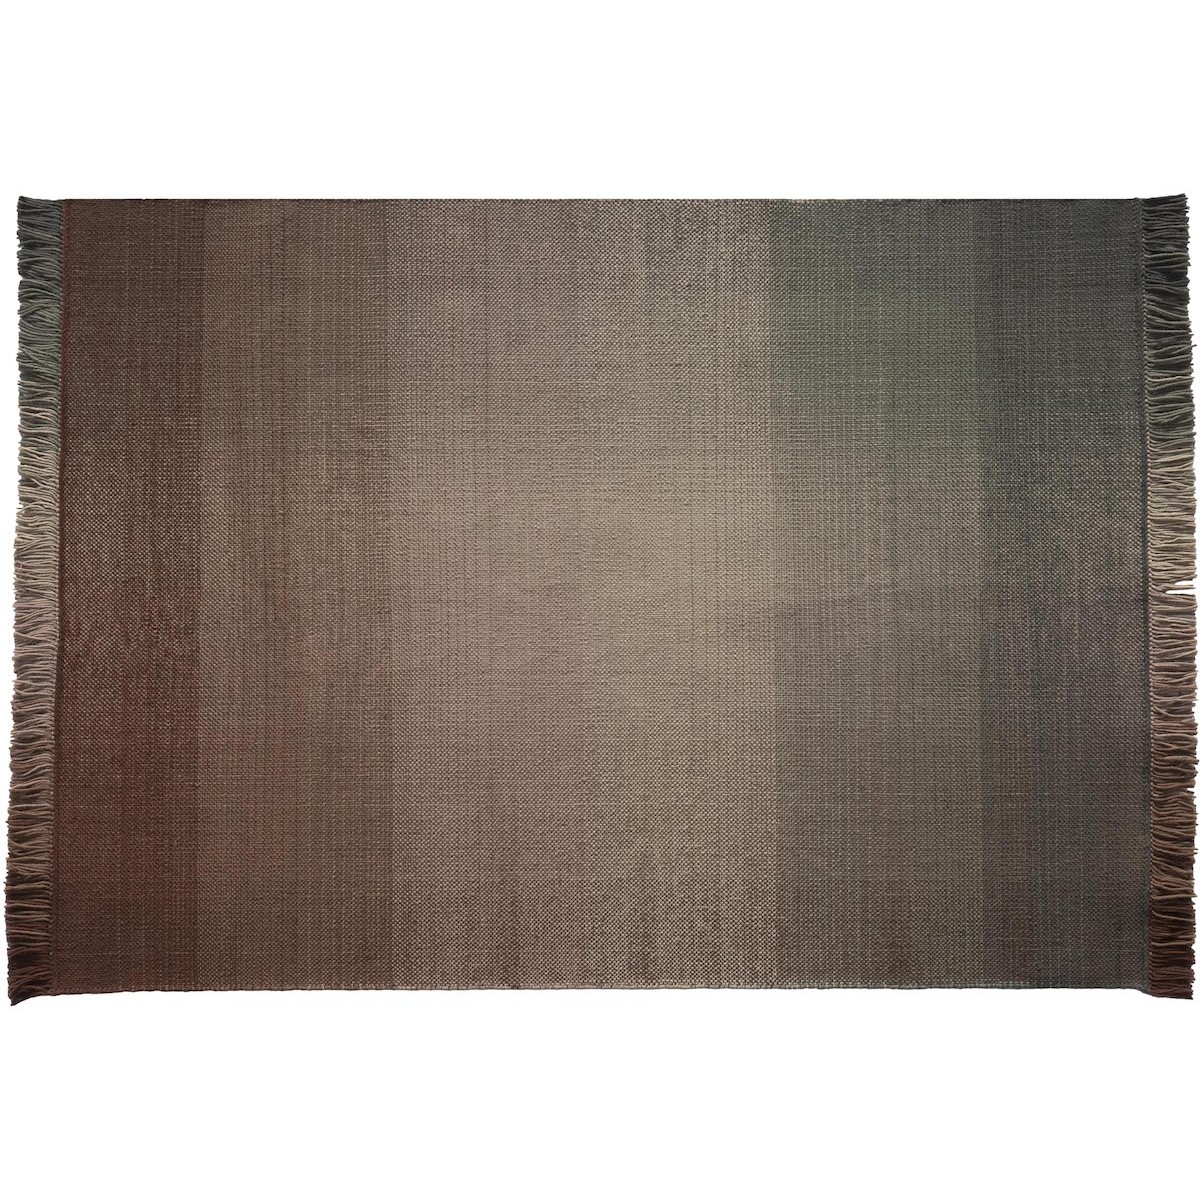 170x240cm - Palette 4 - polyethylene Shade rug